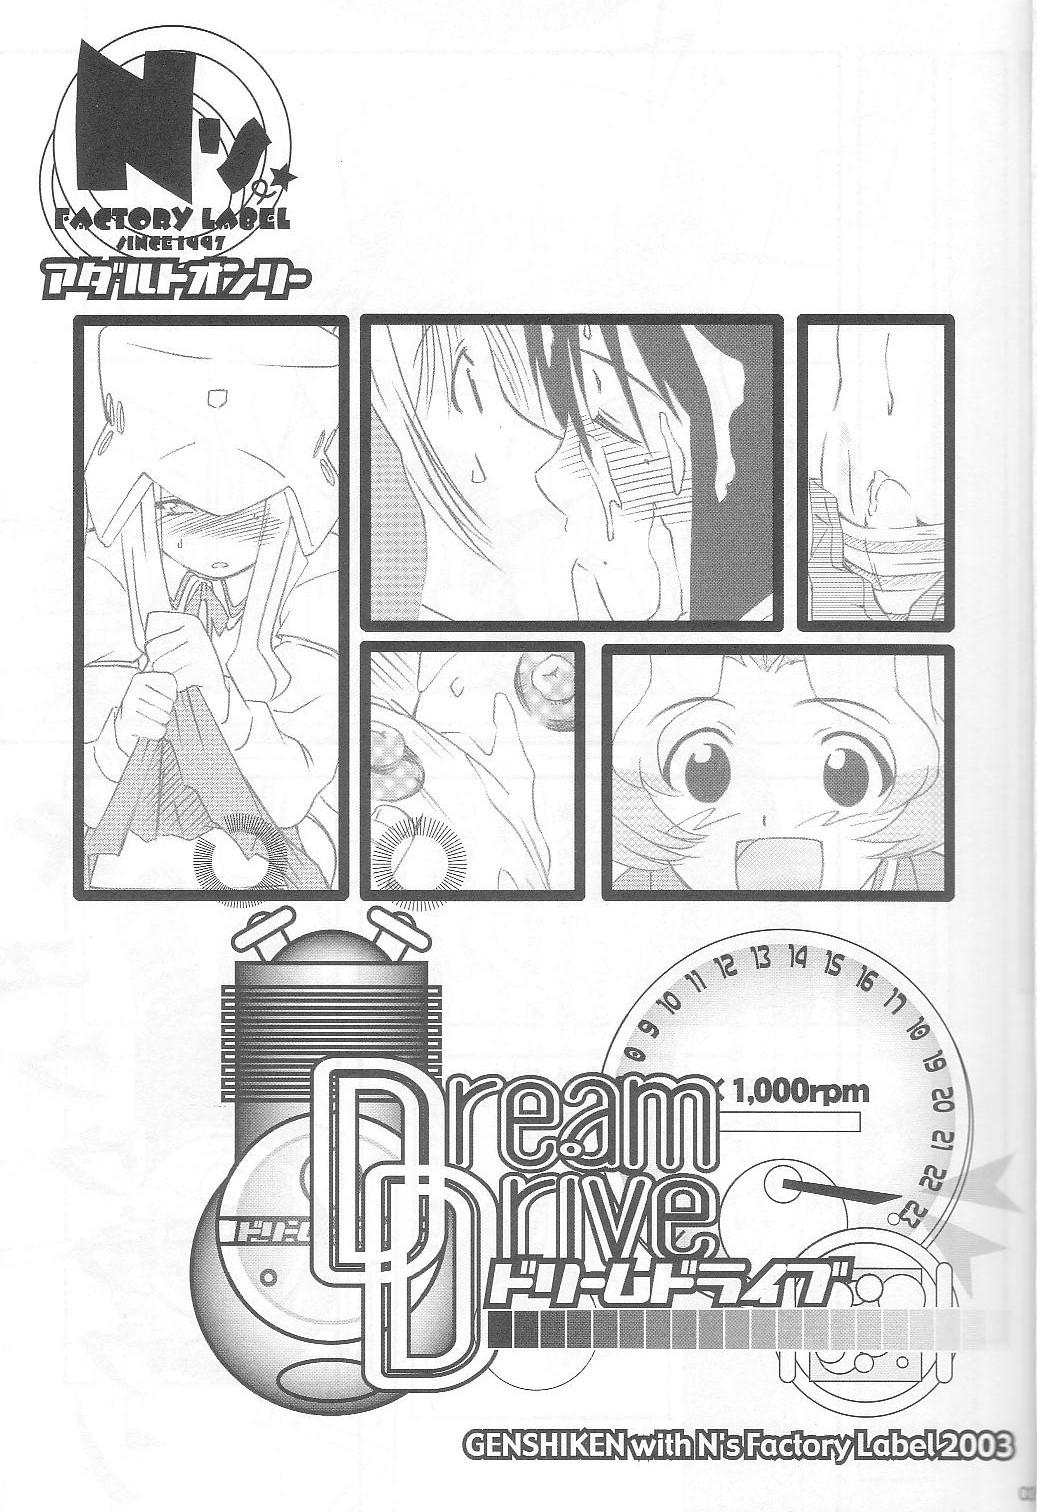 Maledom Dream Drive - Genshiken Gorda - Page 2